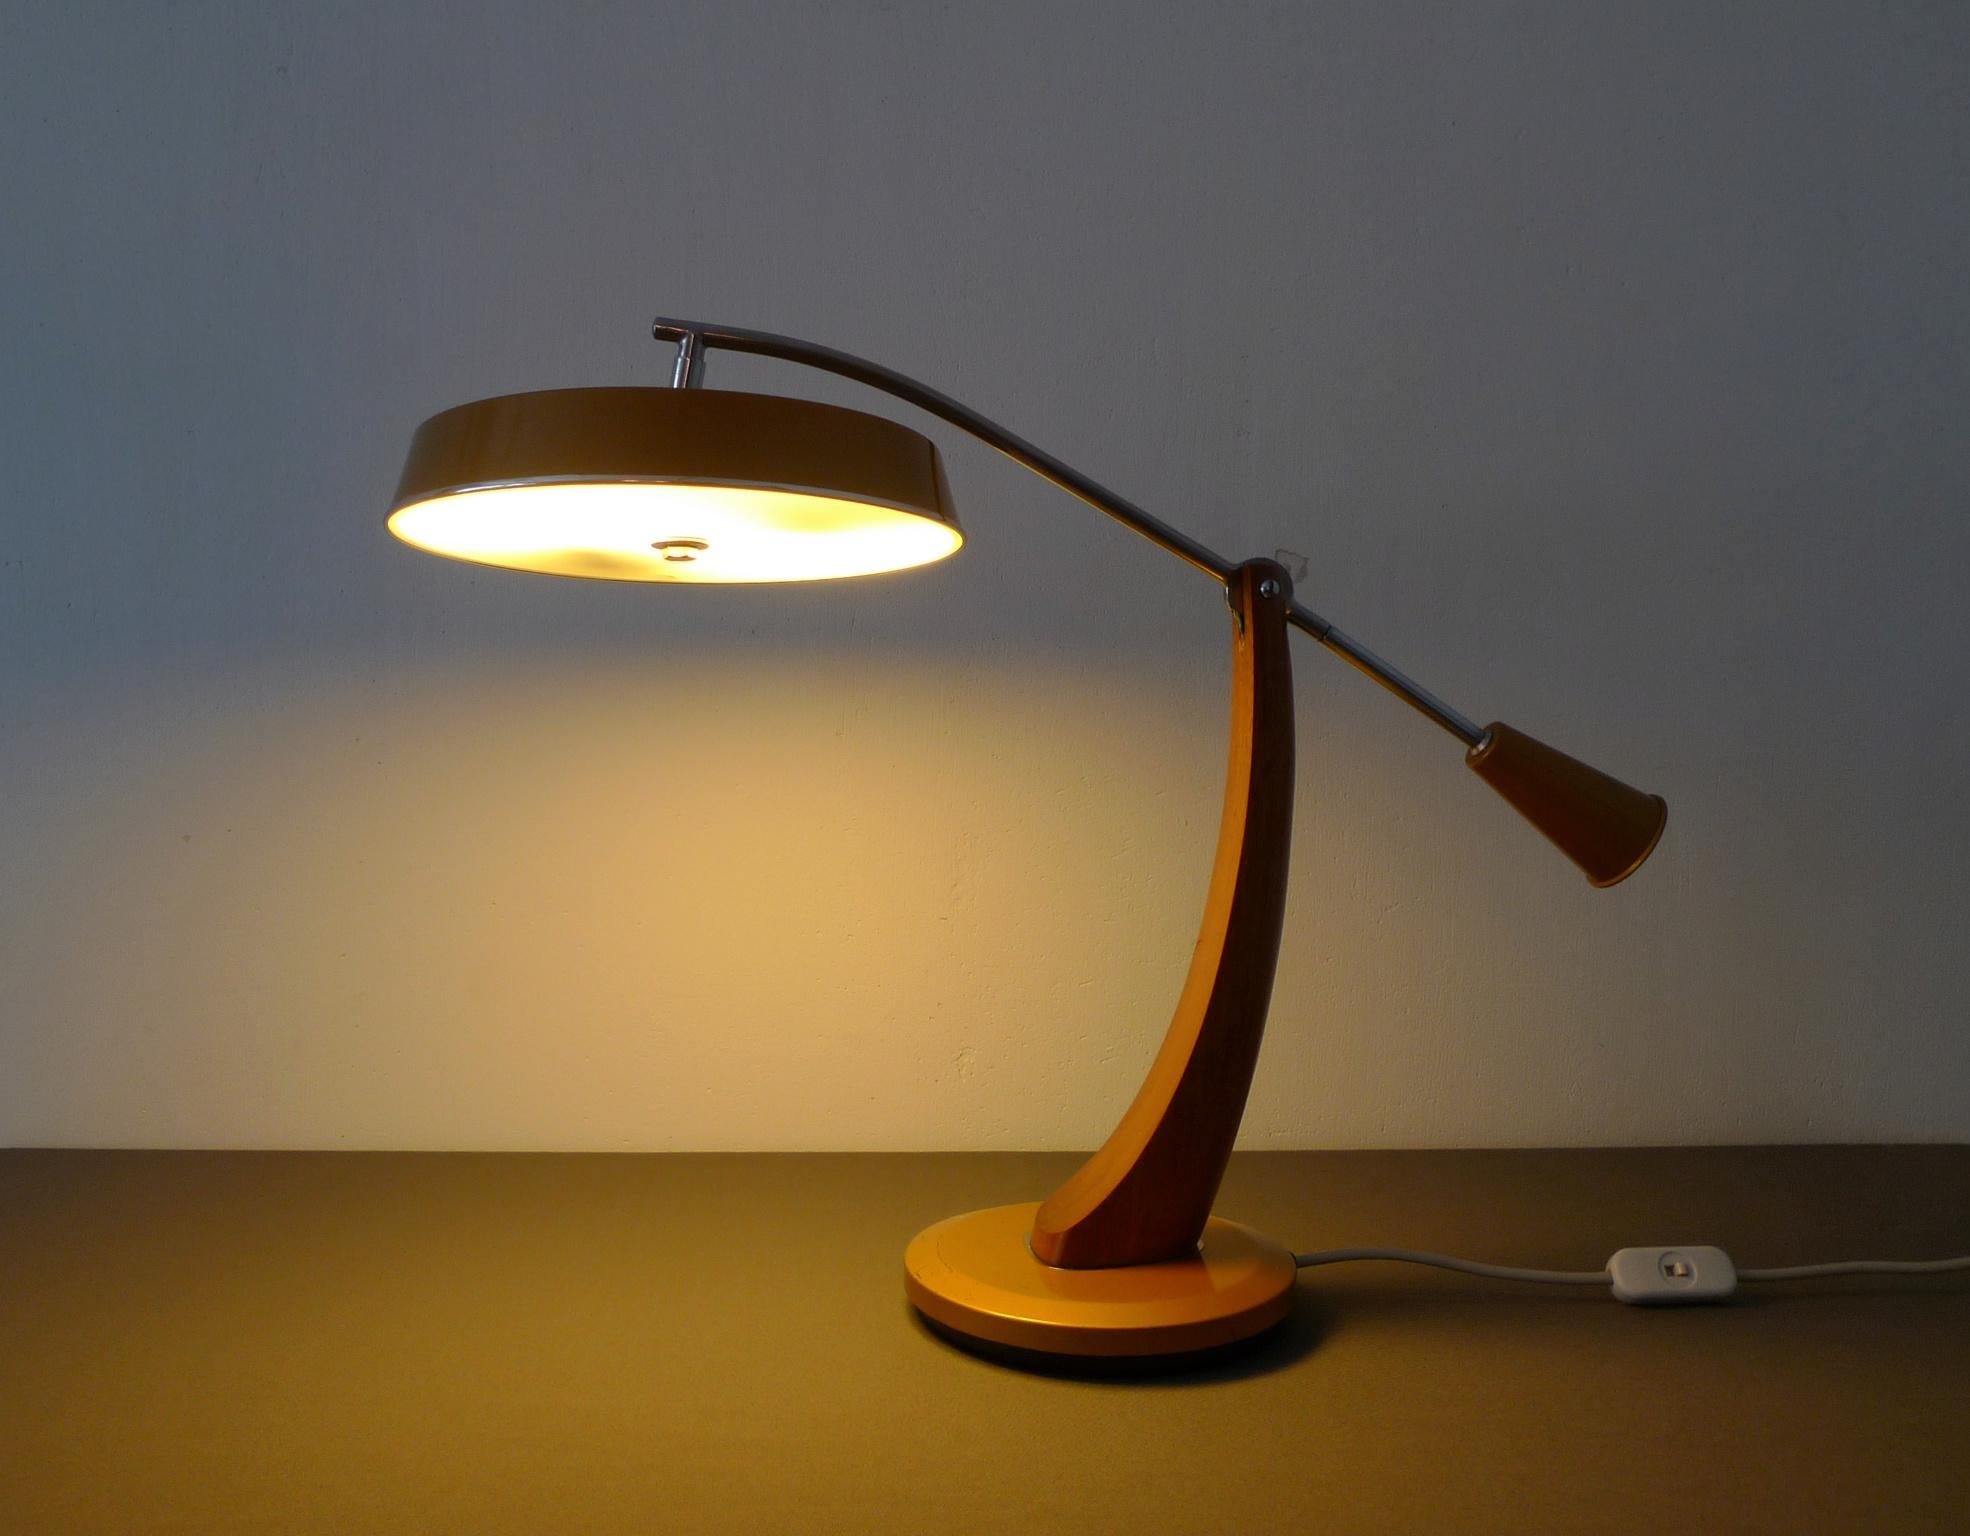 20th Century El Presidente Pendulo Desk Lamp from Fase, Spain, 1960s